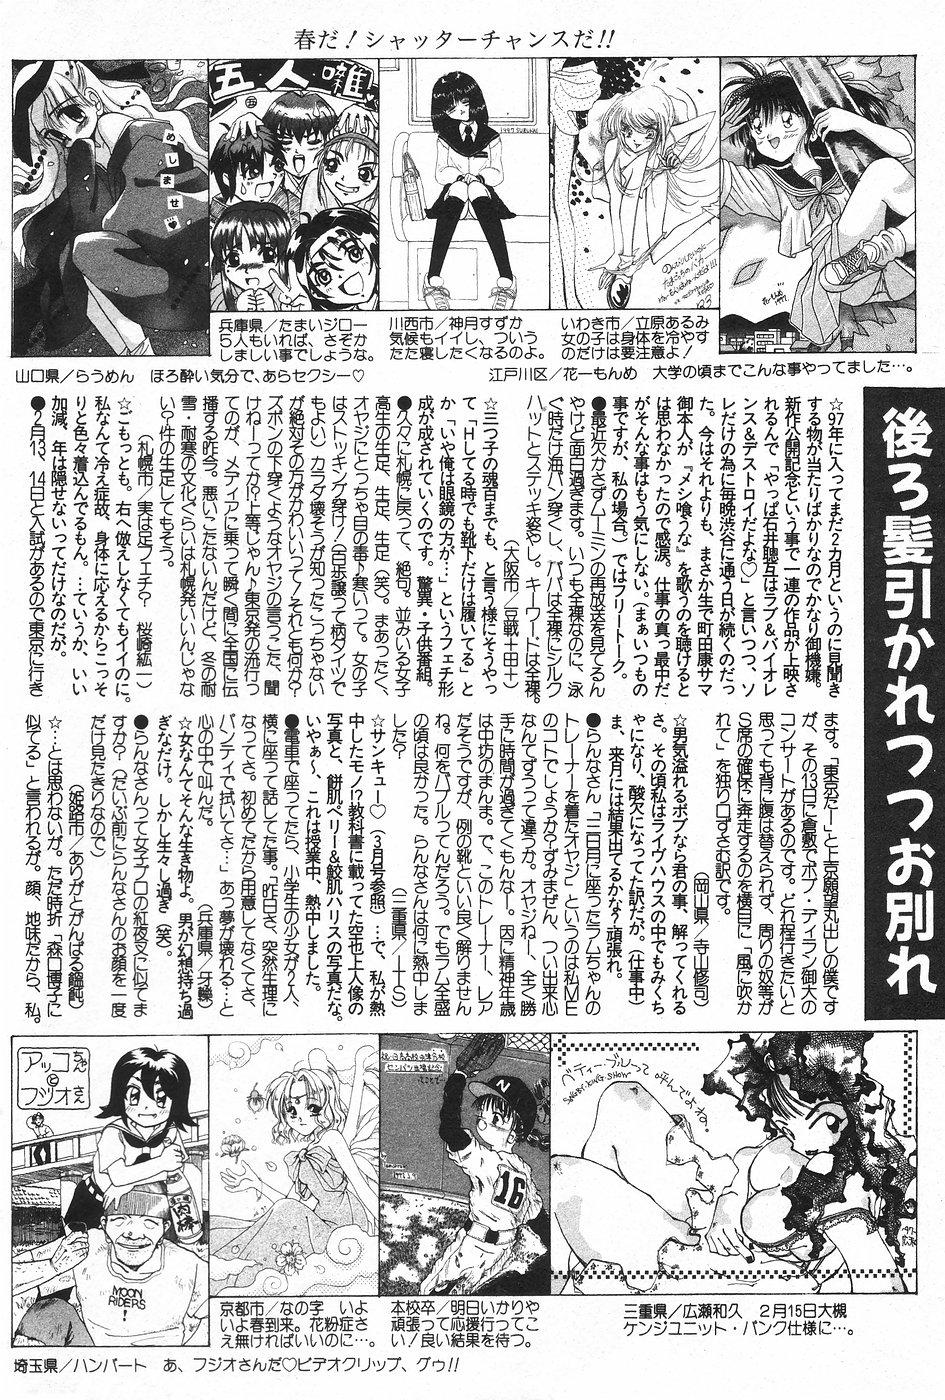 Manga Hotmilk 1997-04 154